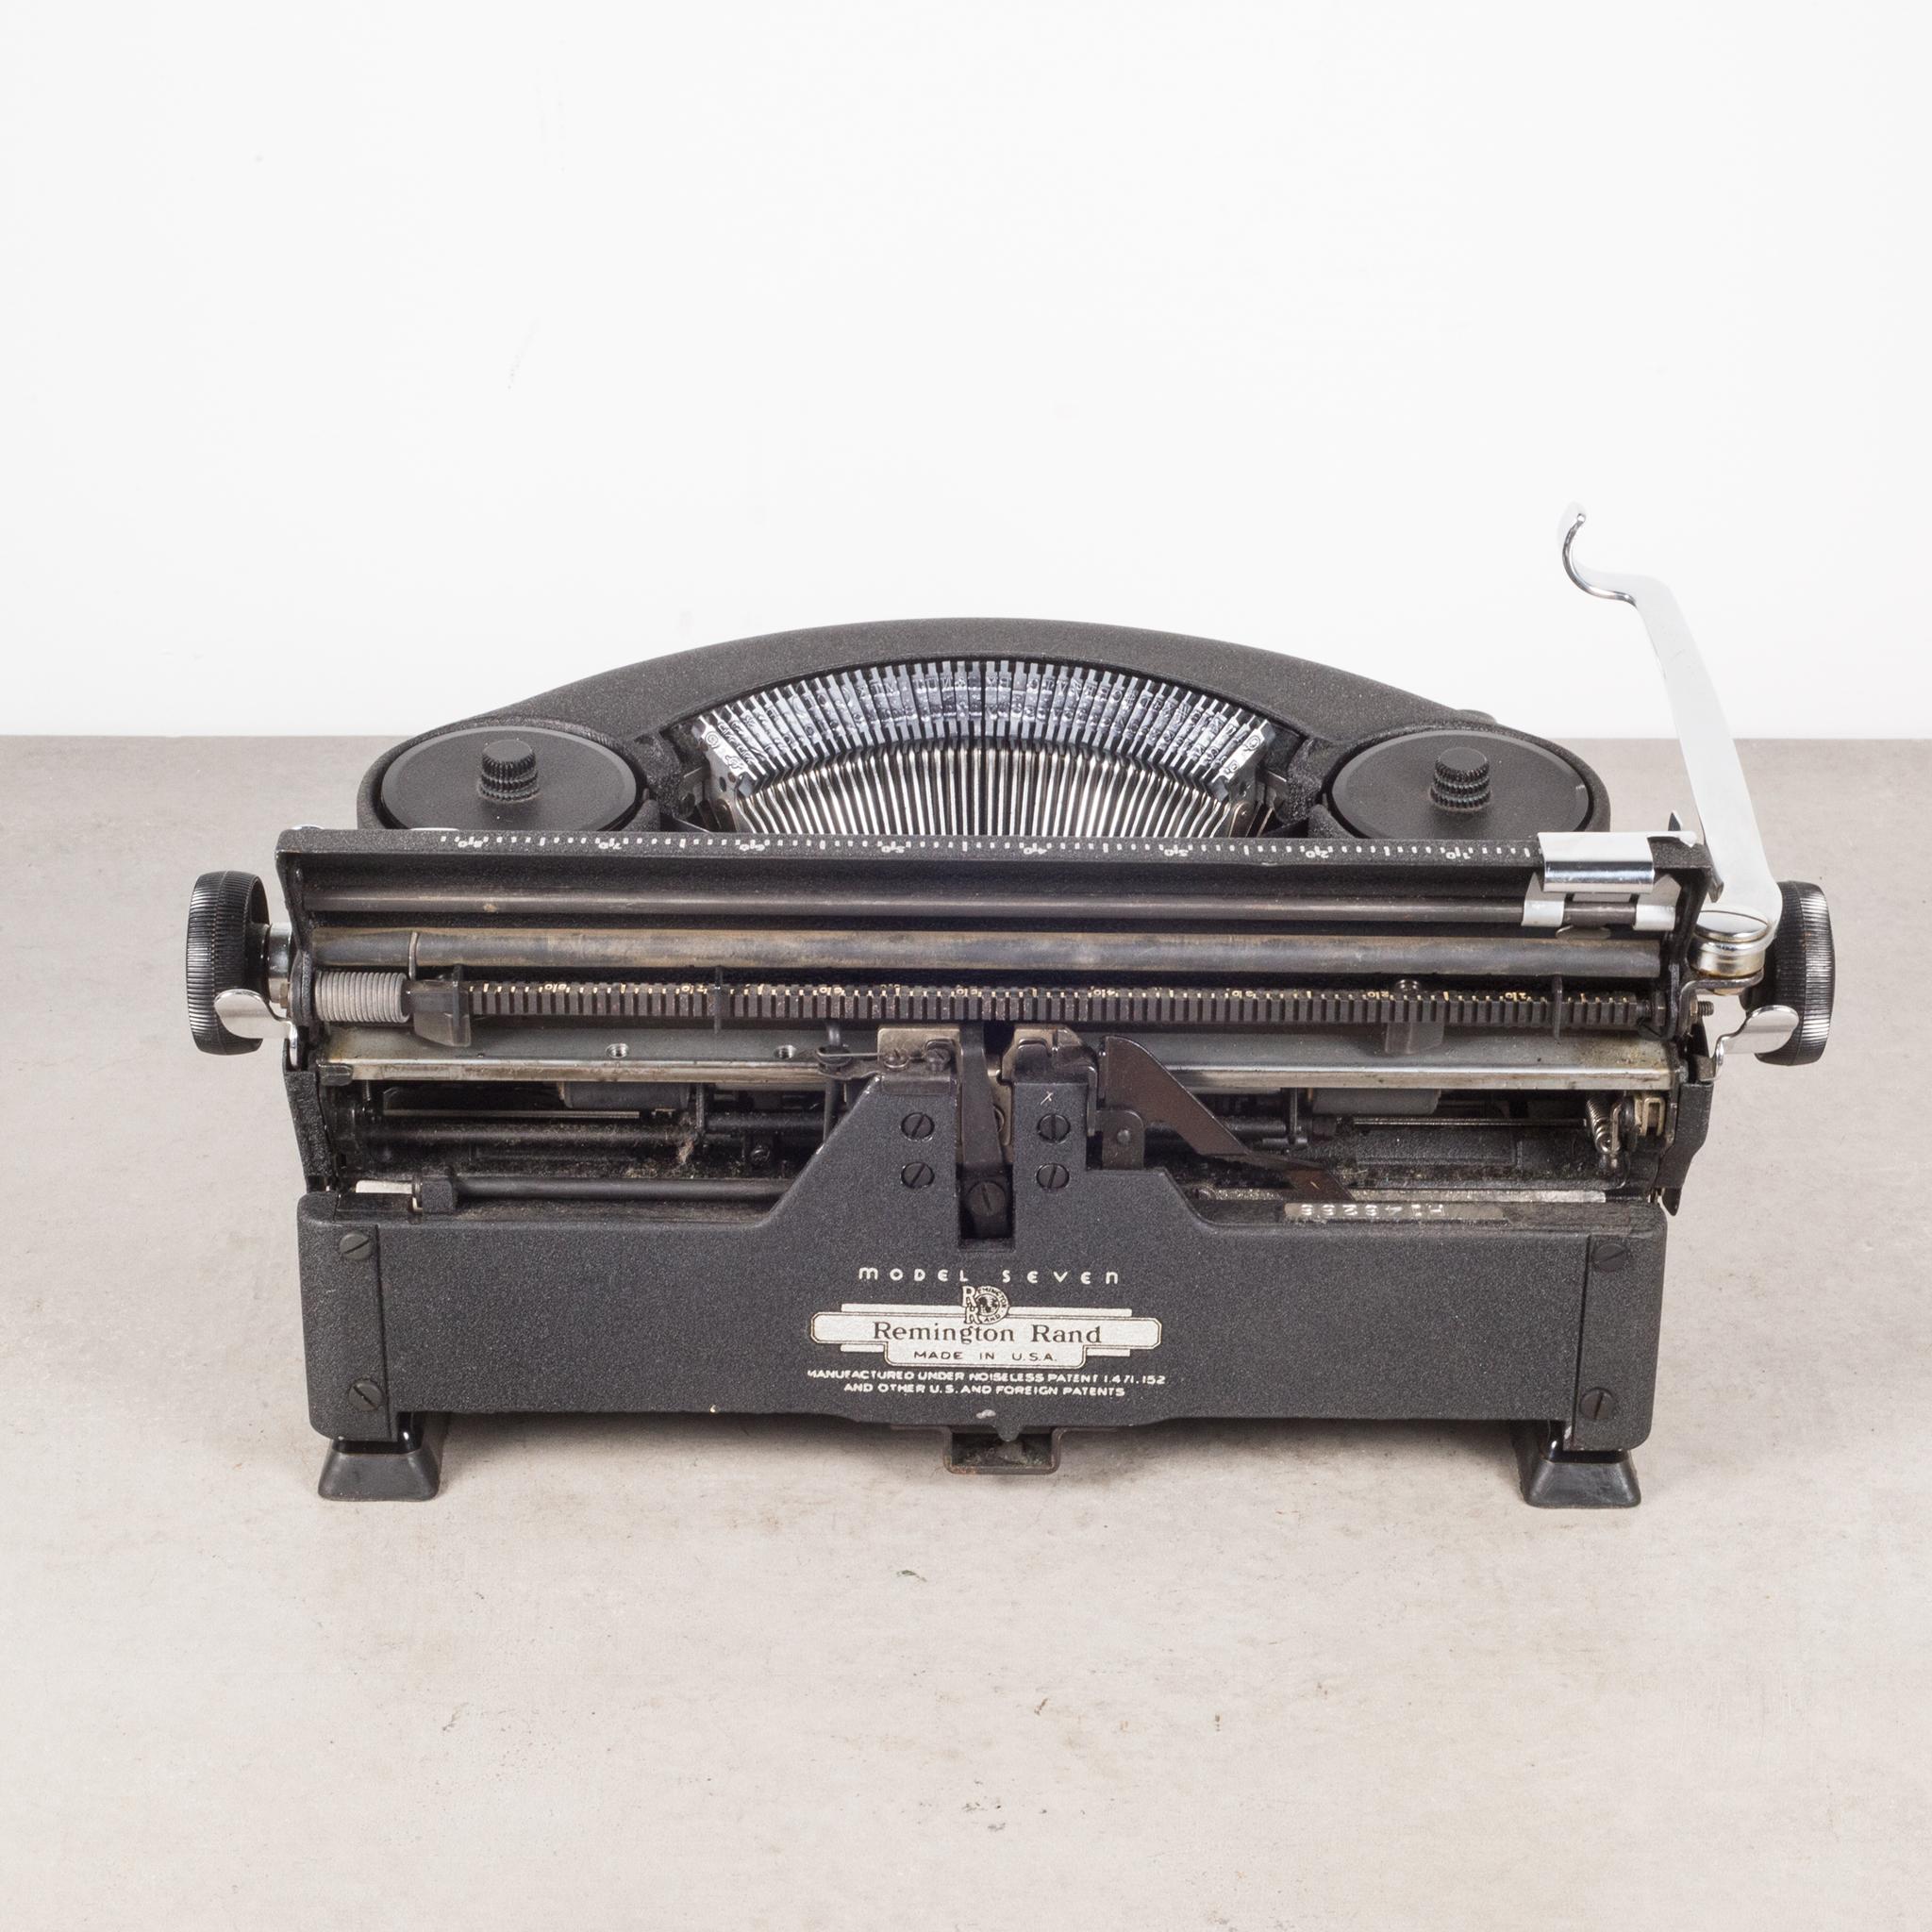 Art Deco Fully Refurbished Remington Portable Noiseless Typewriter, c.1932